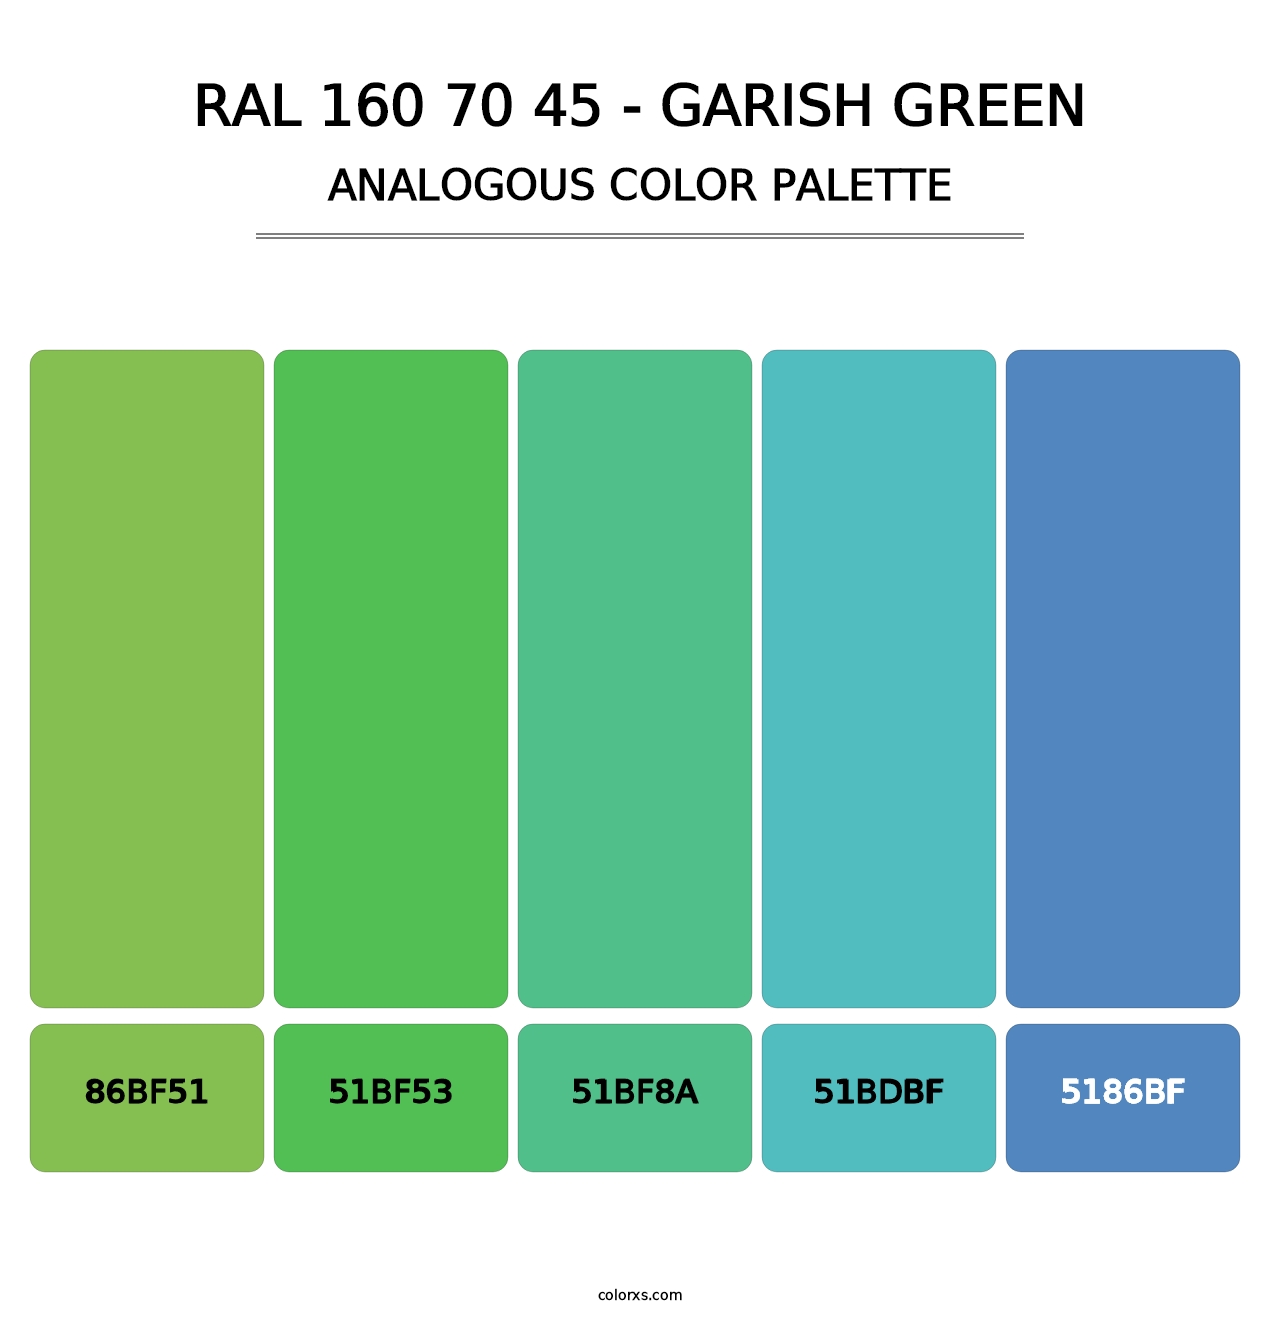 RAL 160 70 45 - Garish Green - Analogous Color Palette